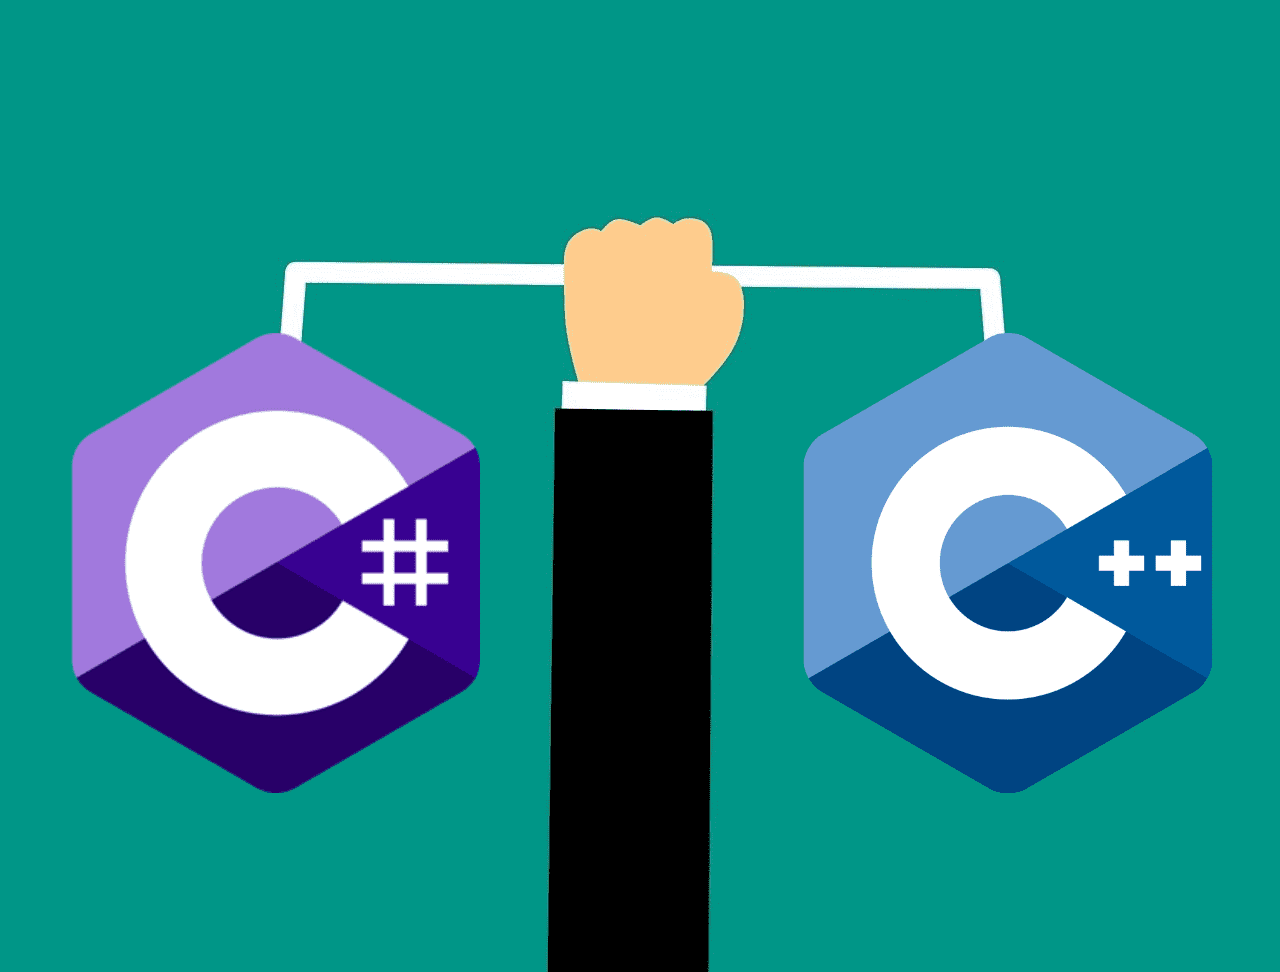 C# vs C++